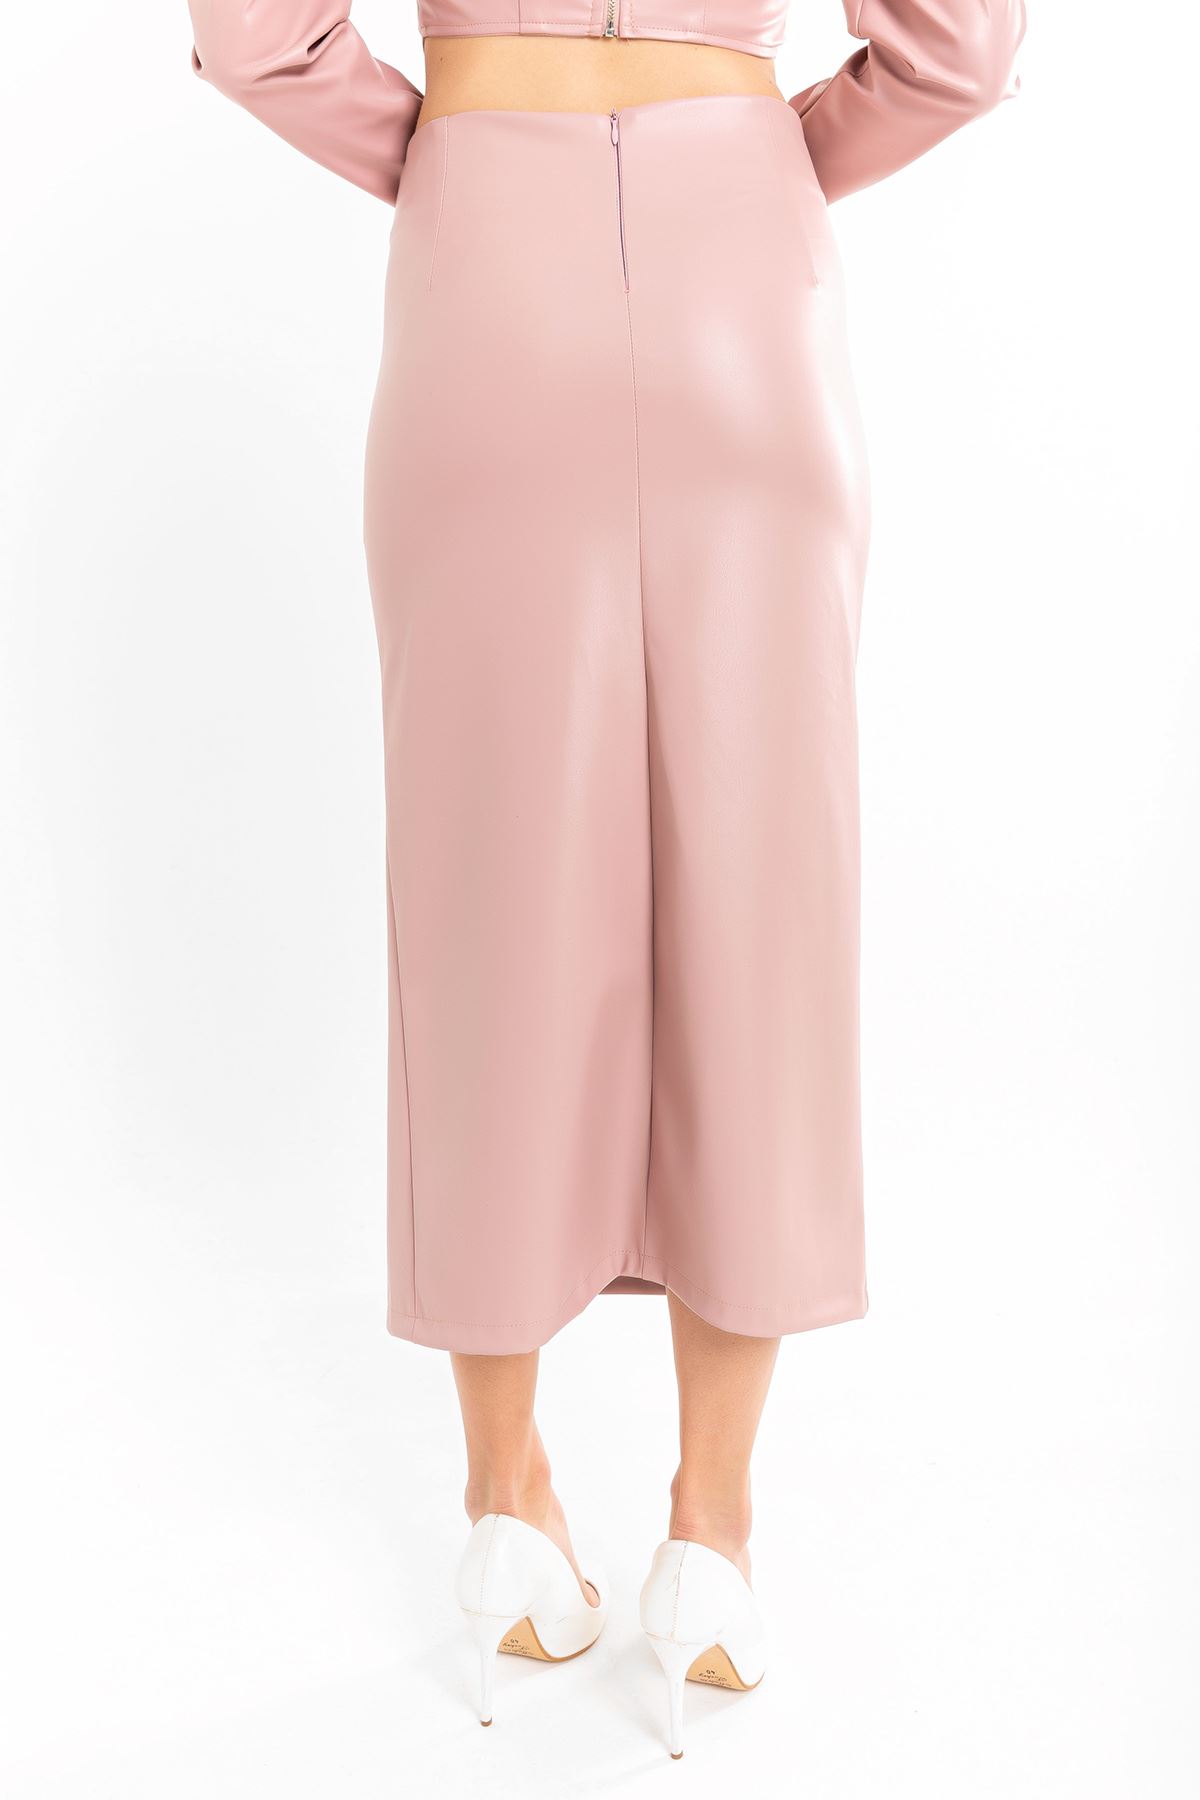 Leather Fabric Above Knee Shirred Slit Women'S Skirt - Light Pink